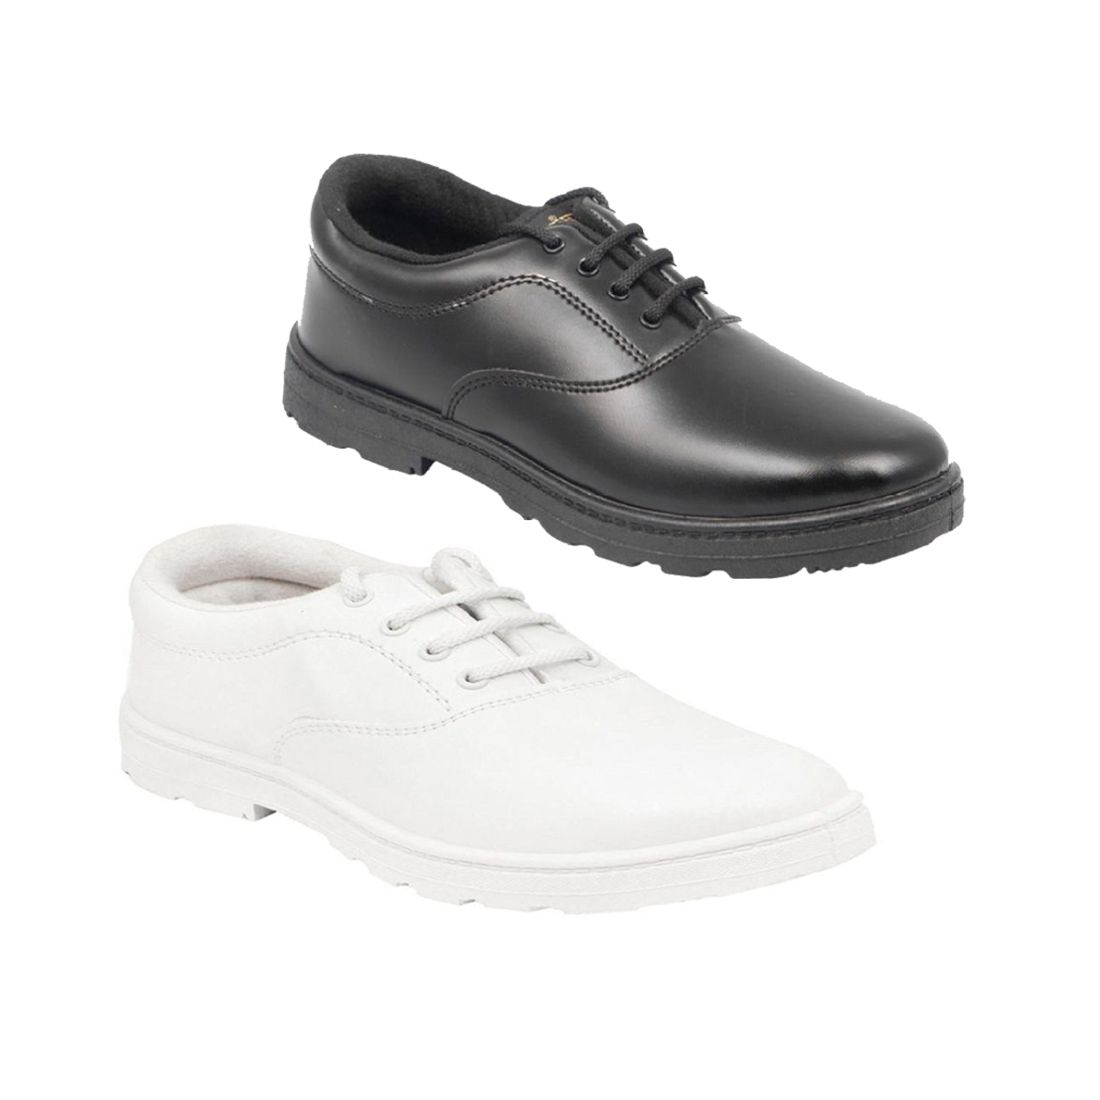 D DASS Boys School Shoes Black White 